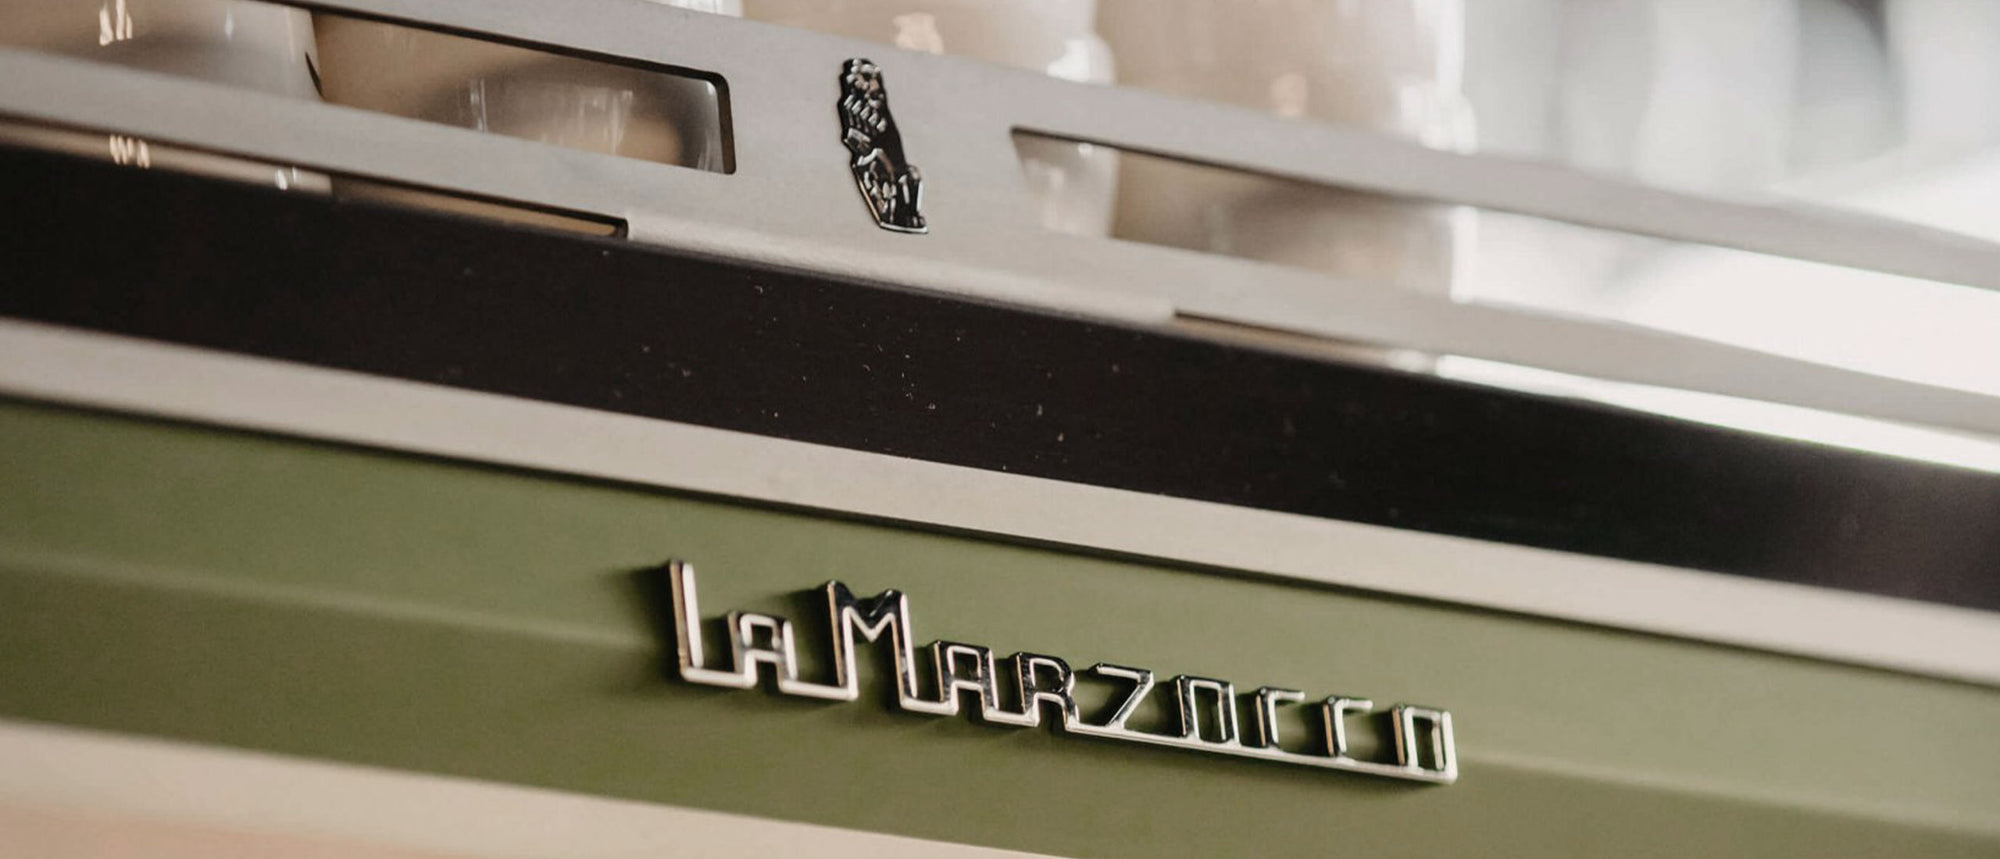 Experience effortless brewing: the innovative La Marzocco KB90 espresso machine